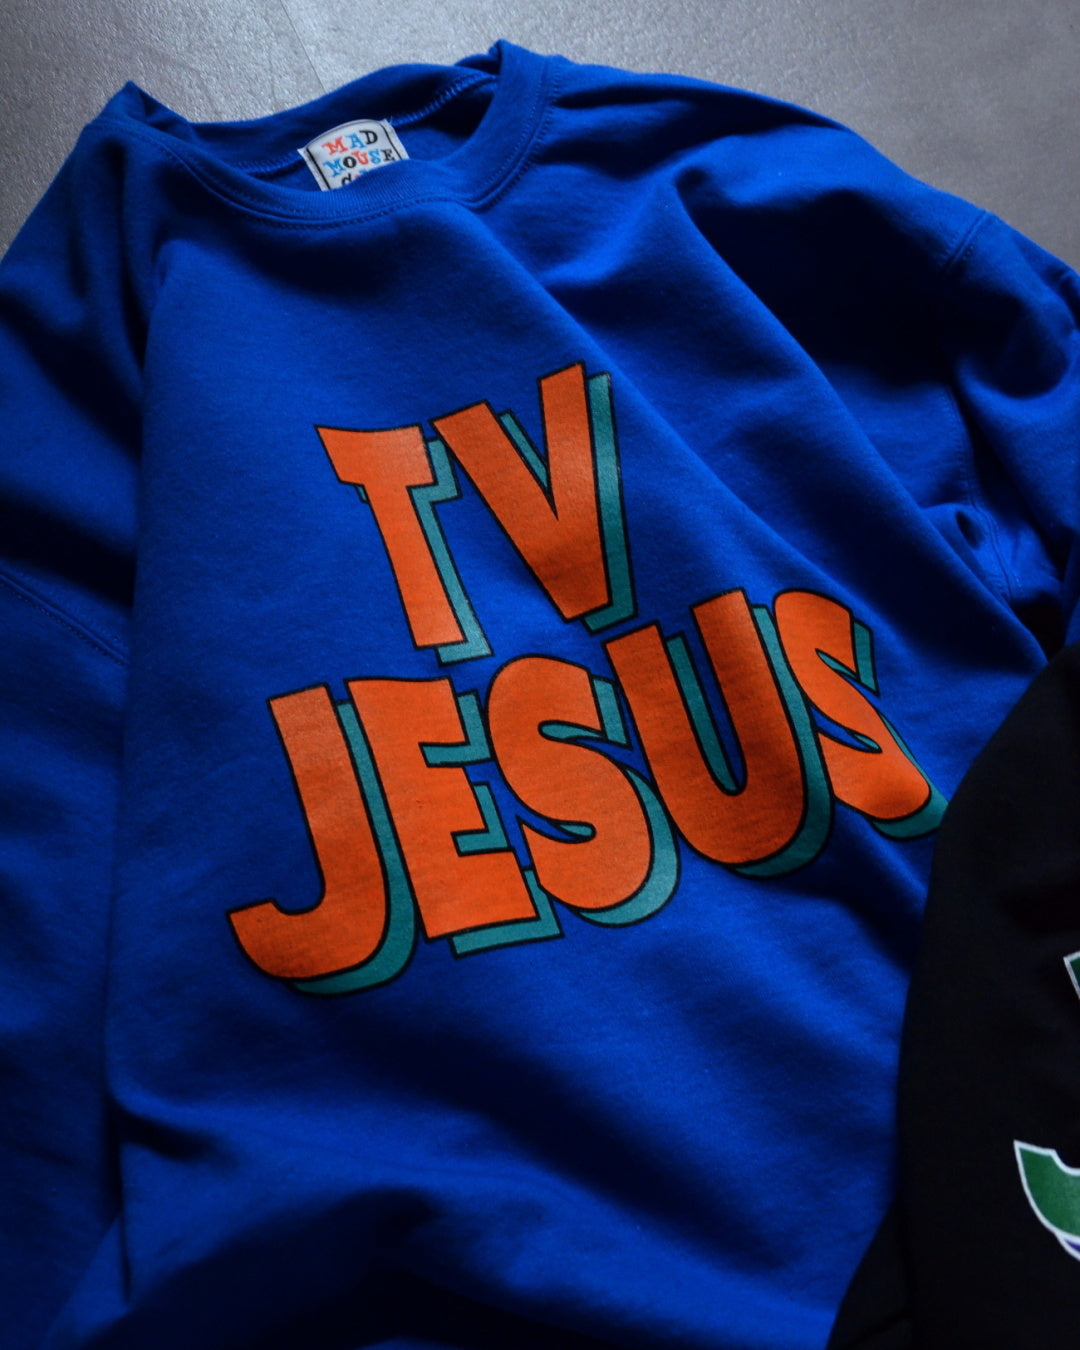 MAD MOUSE COMIC | TV JESUS SWEAT - Blue